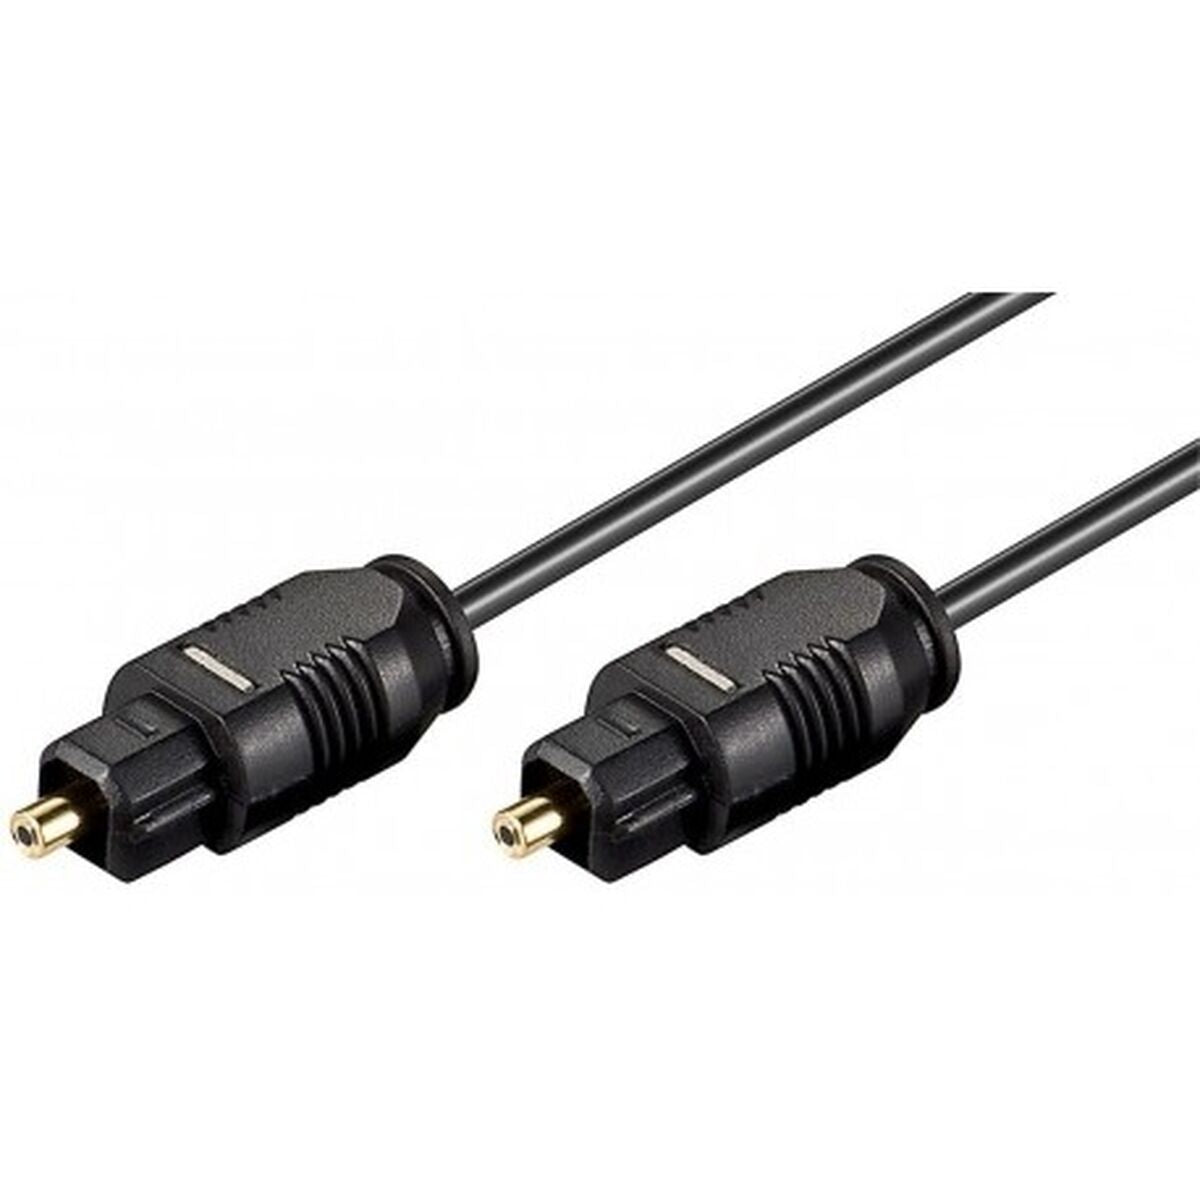 Fibre optic cable Wirboo W503 Black